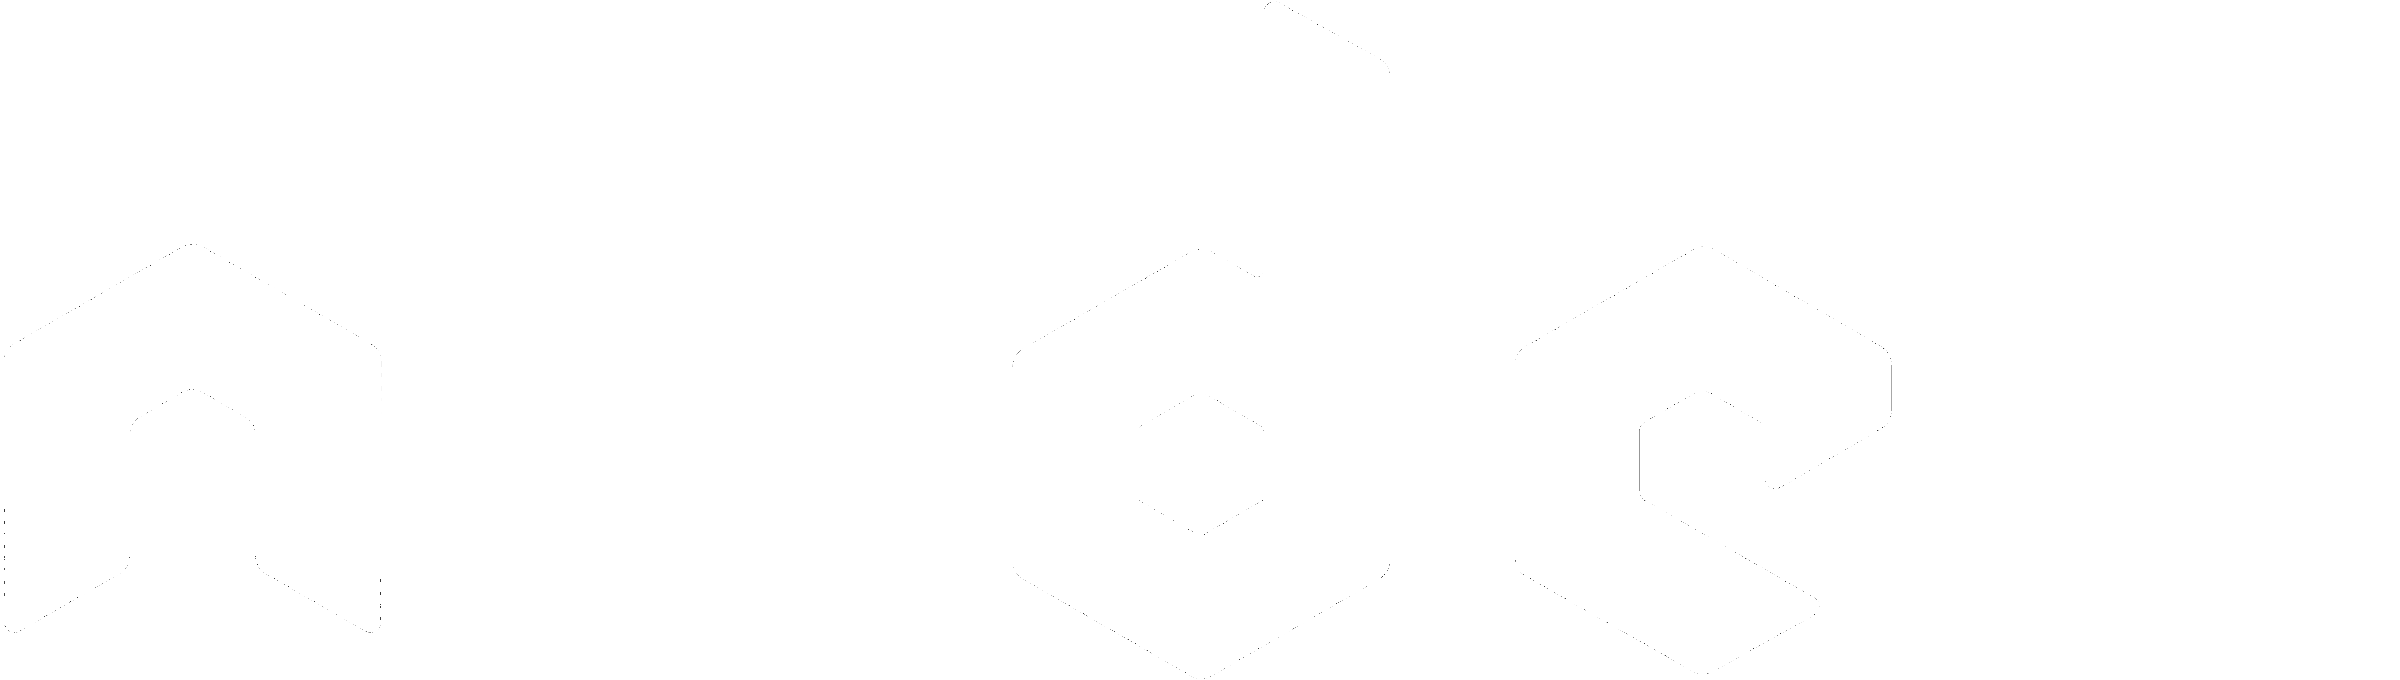 Node.js Logo - NodeJS Logo PNG Transparent & SVG Vector